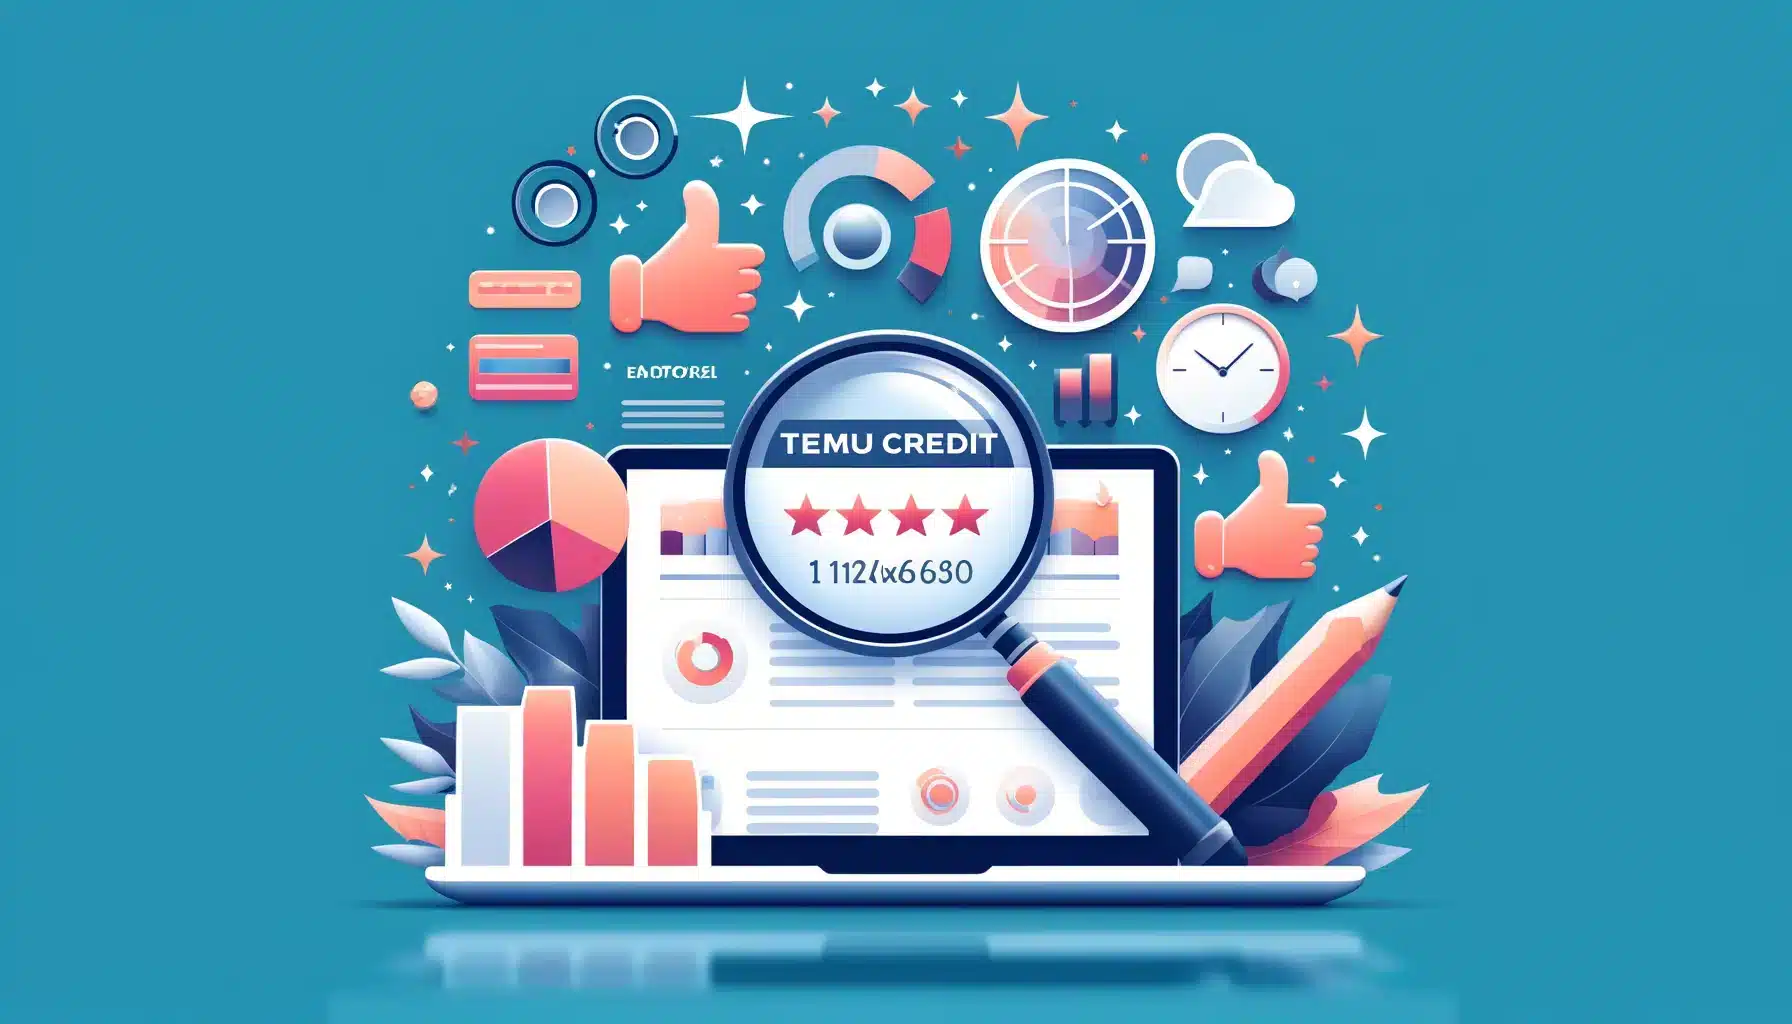 Temu Credit Explored User Ratings & Critical Analysis Revealed